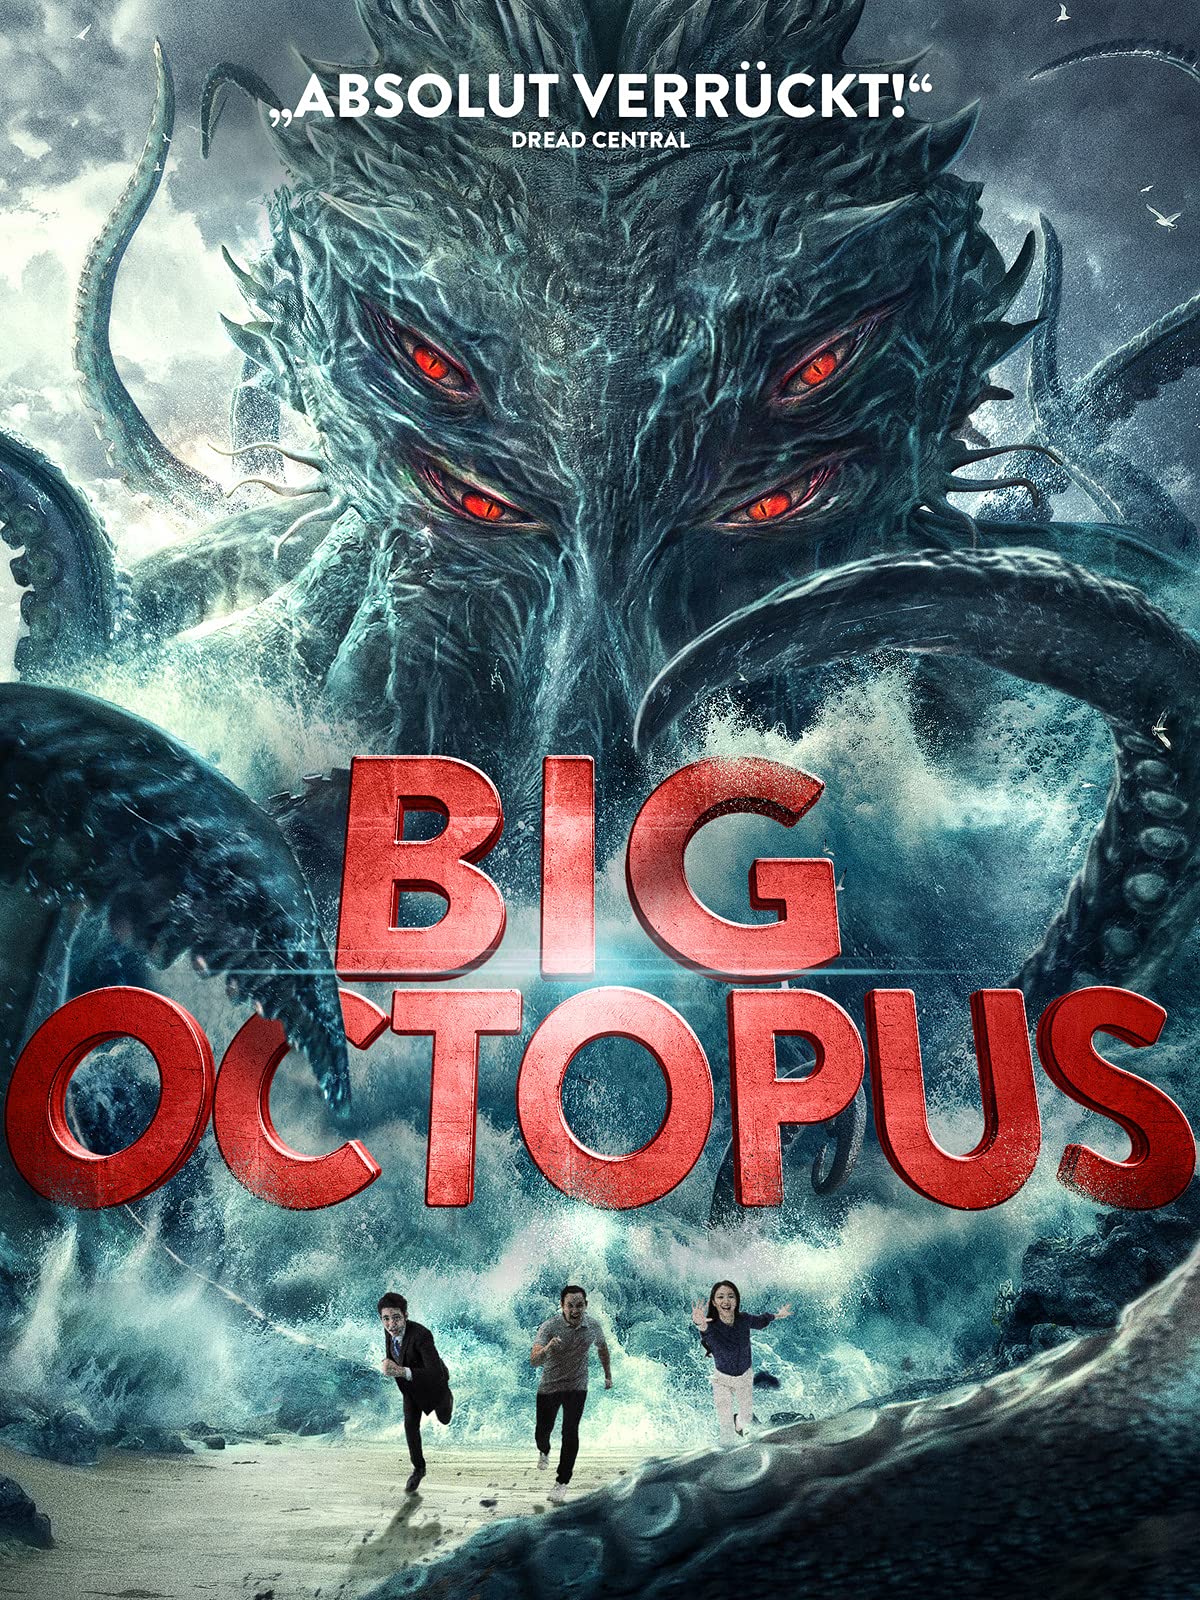 Big Octopus 2020 Tamil Dubbed Horror Movie Online